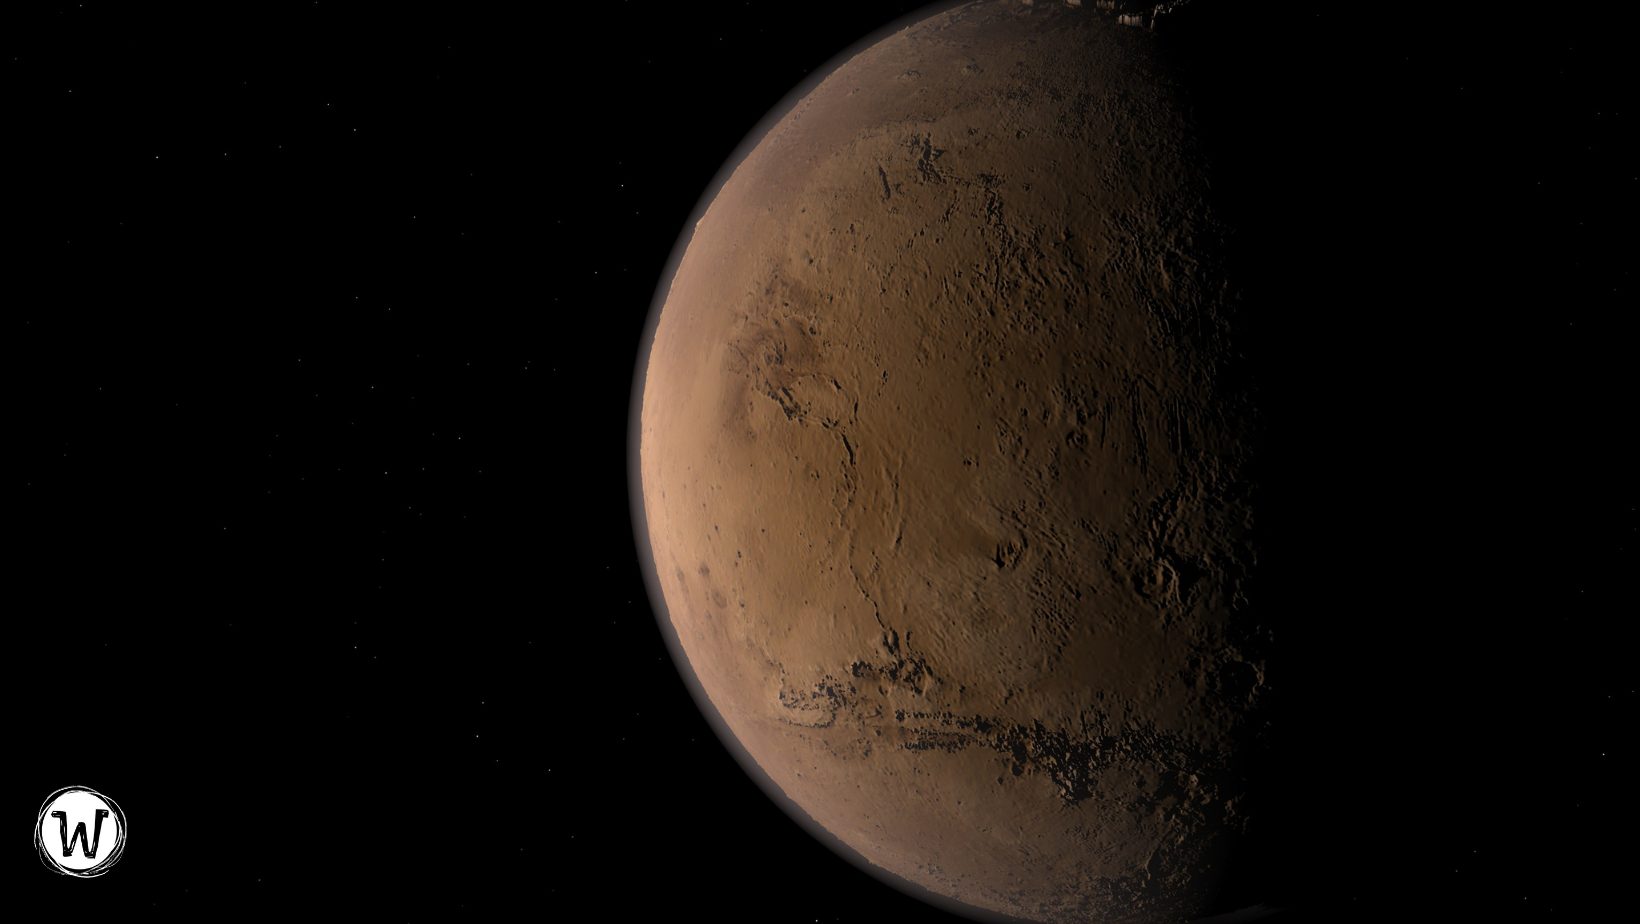 mars exploration